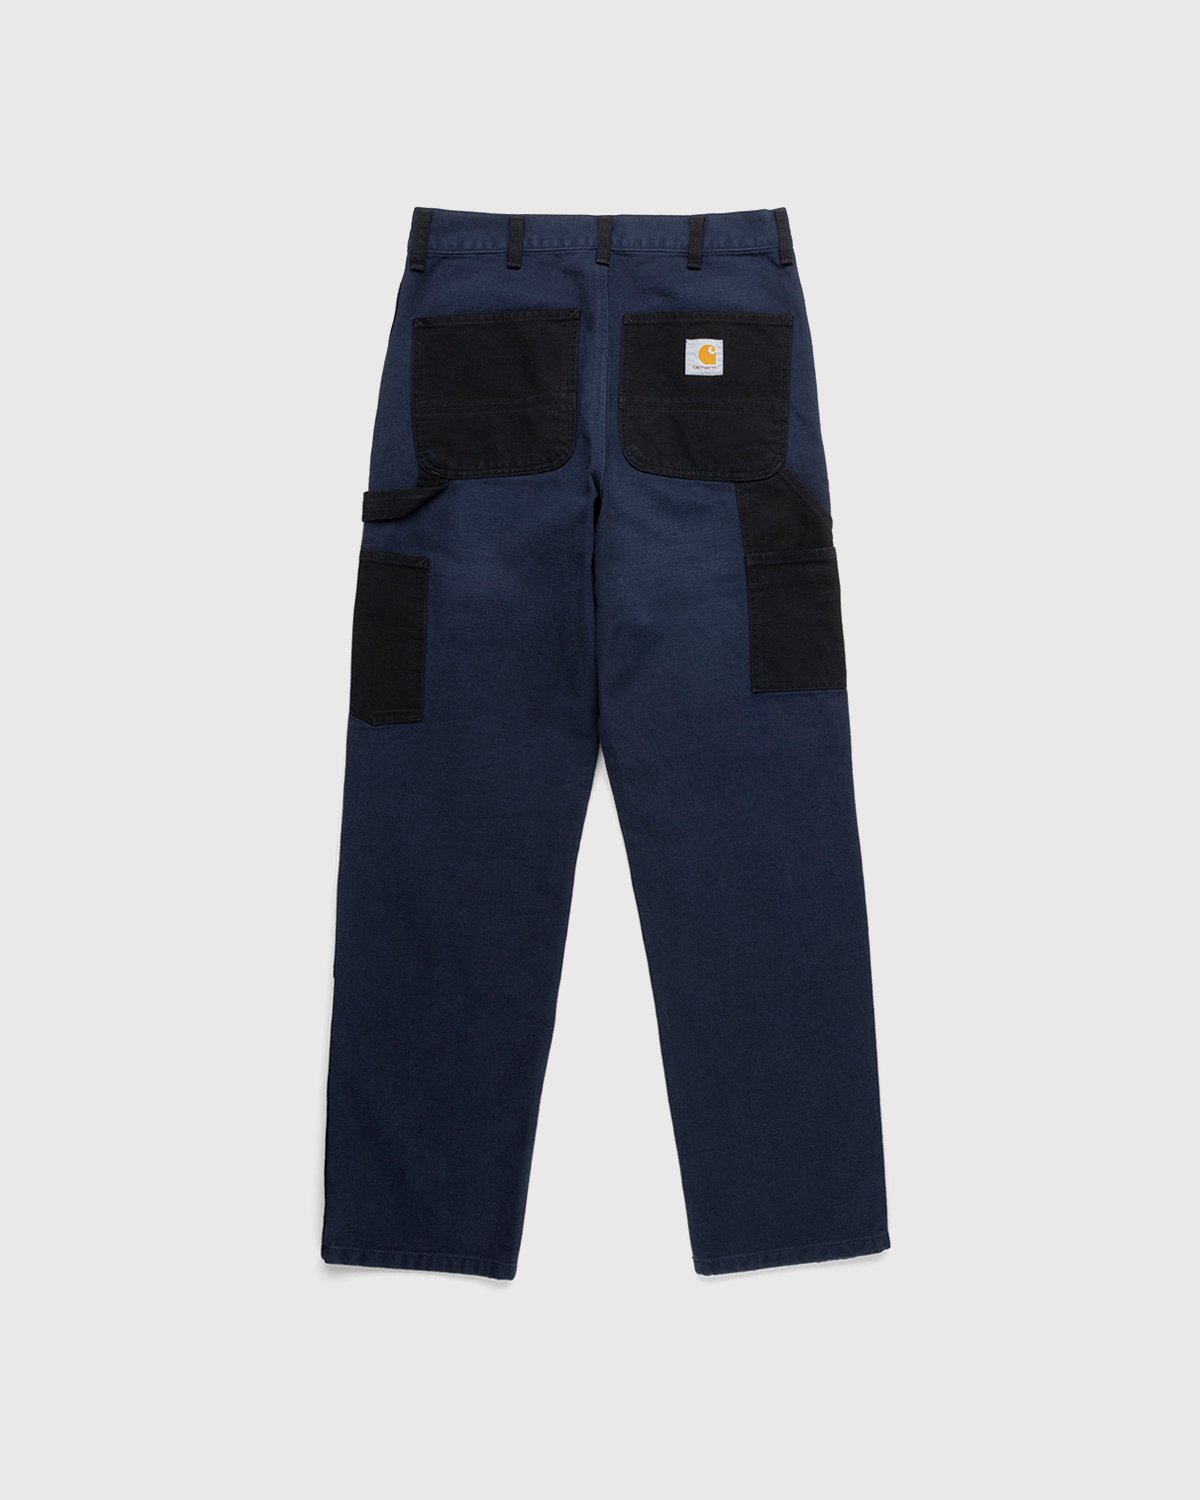 Carhartt WIP - Double Knee Pant Dark Navy - Clothing - Blue - Image 2